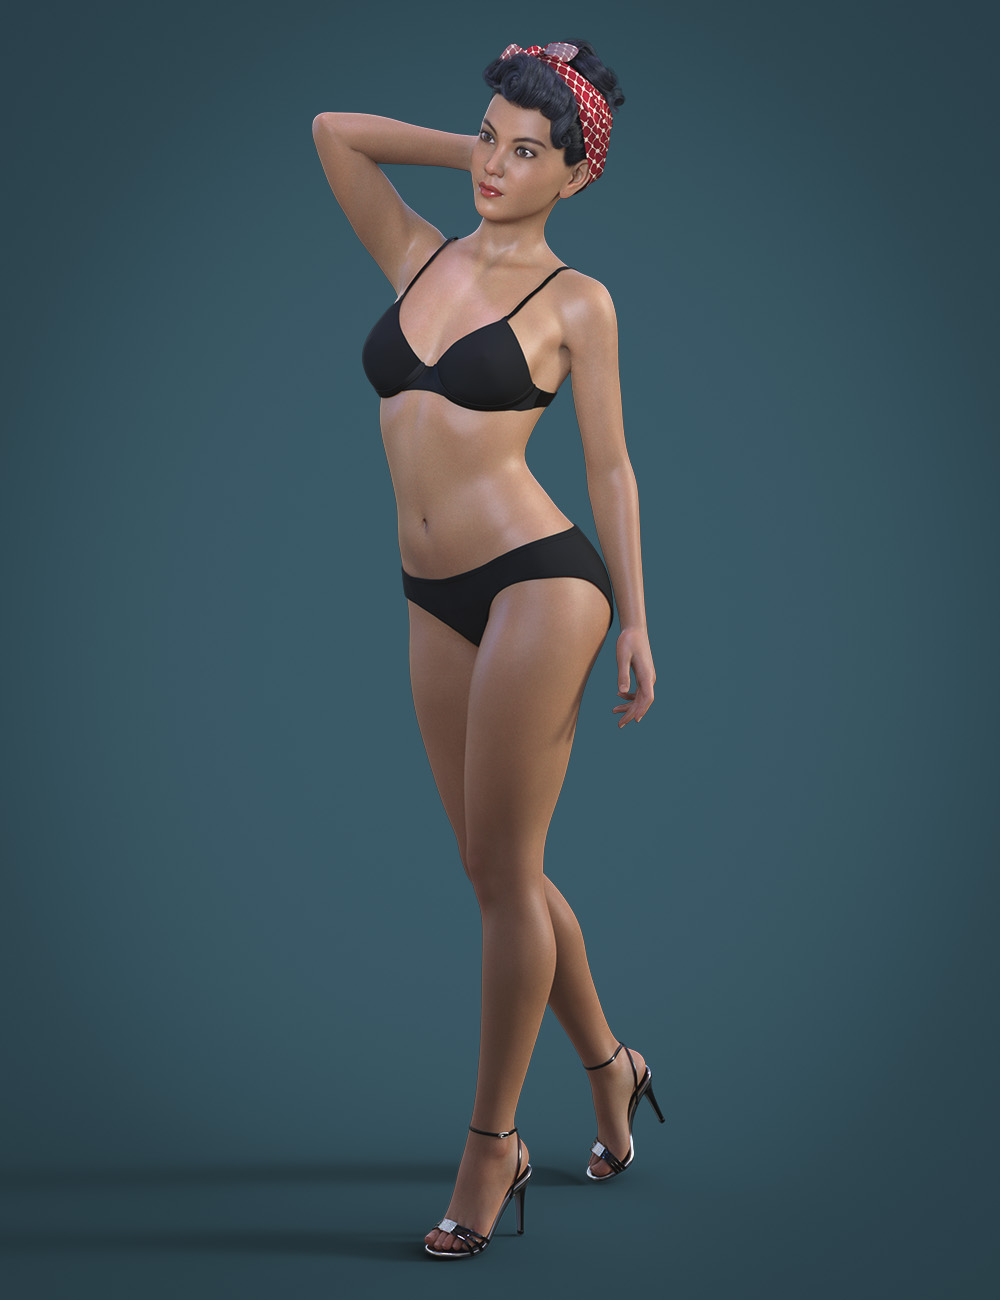 Lillian For Genesis 8 Female by: dx30, 3D Models by Daz 3D